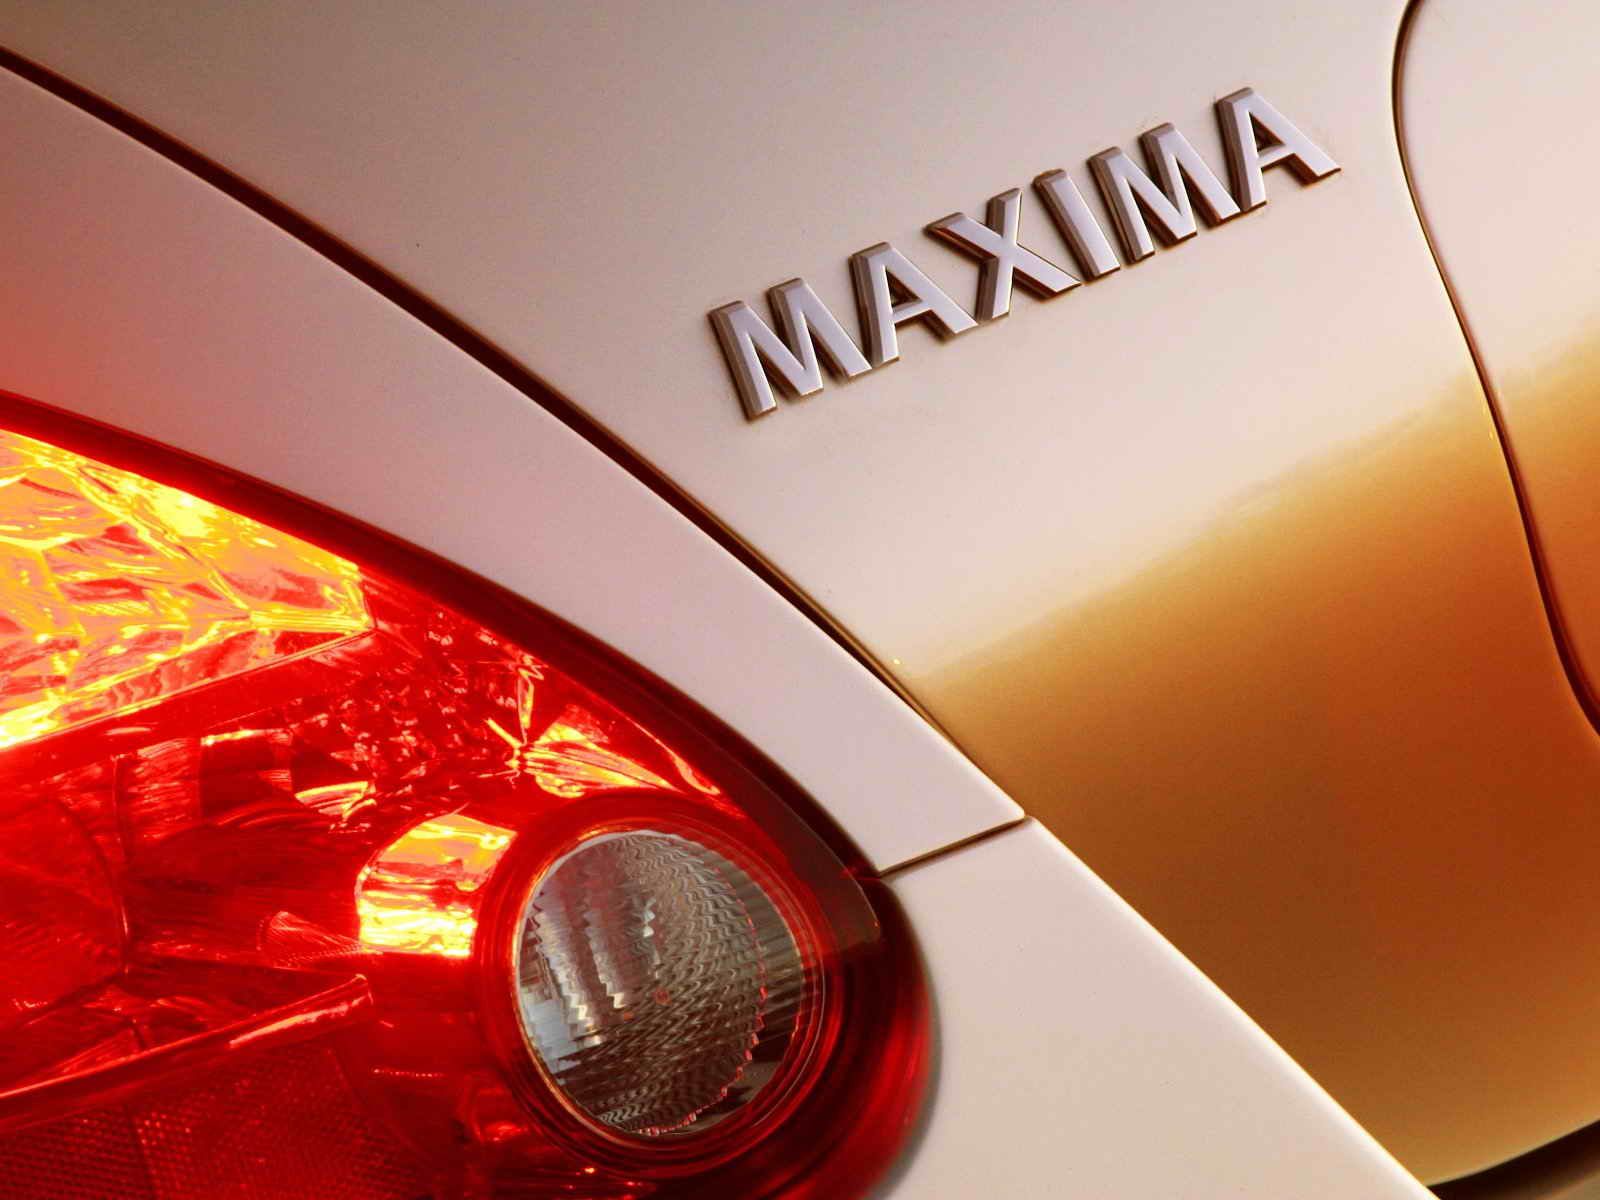 2006 Nissan Maxima SE